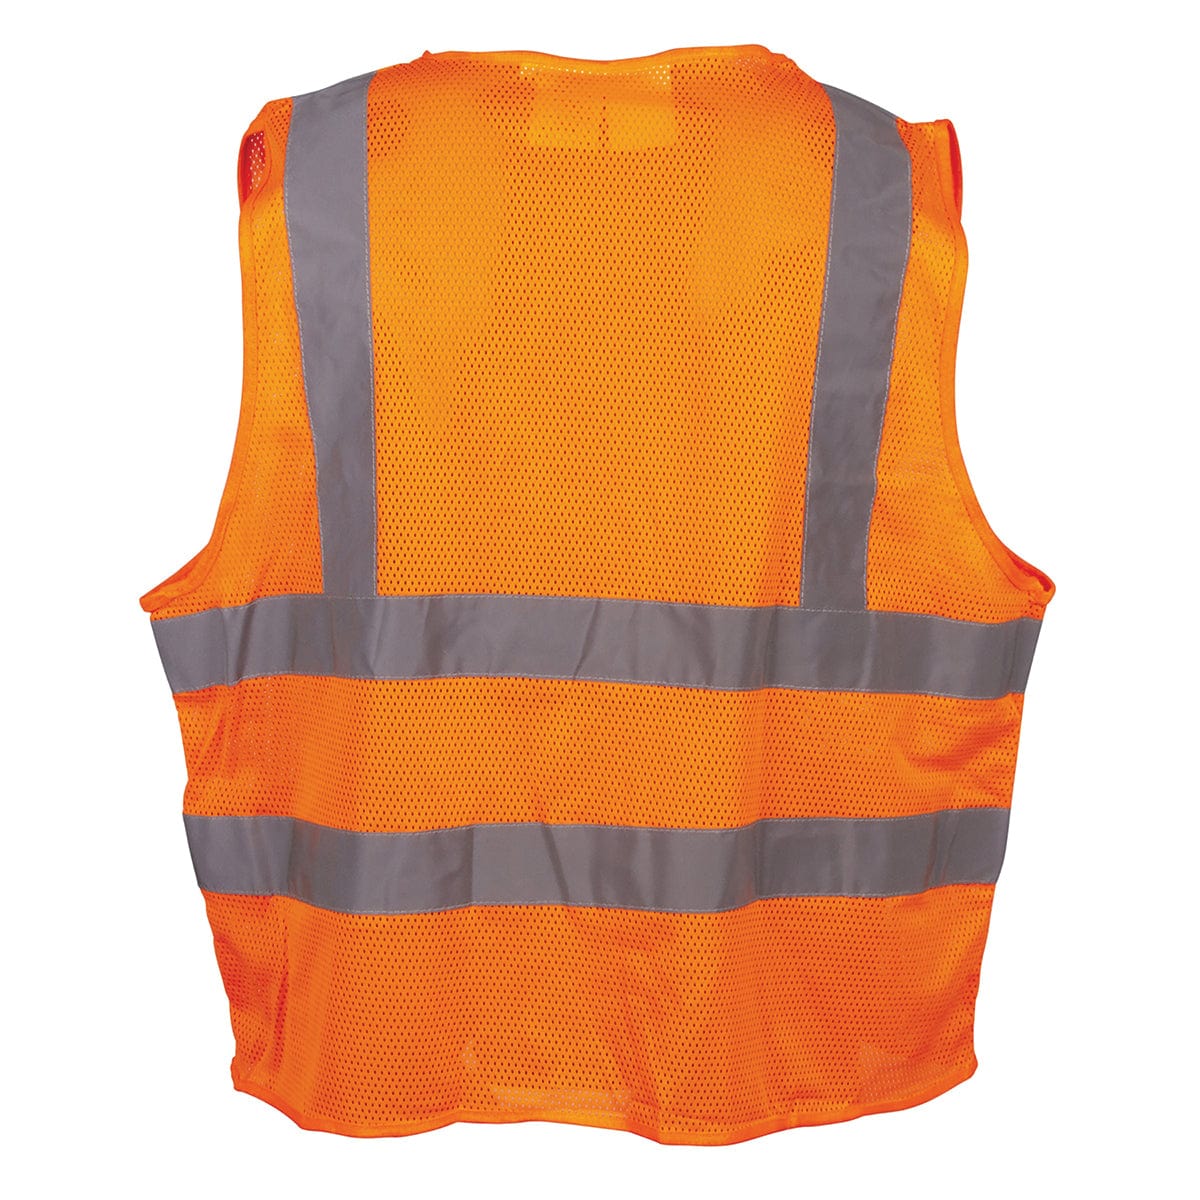 Cordova ANSI Class 2 Self-Extinguishing Safety Vest